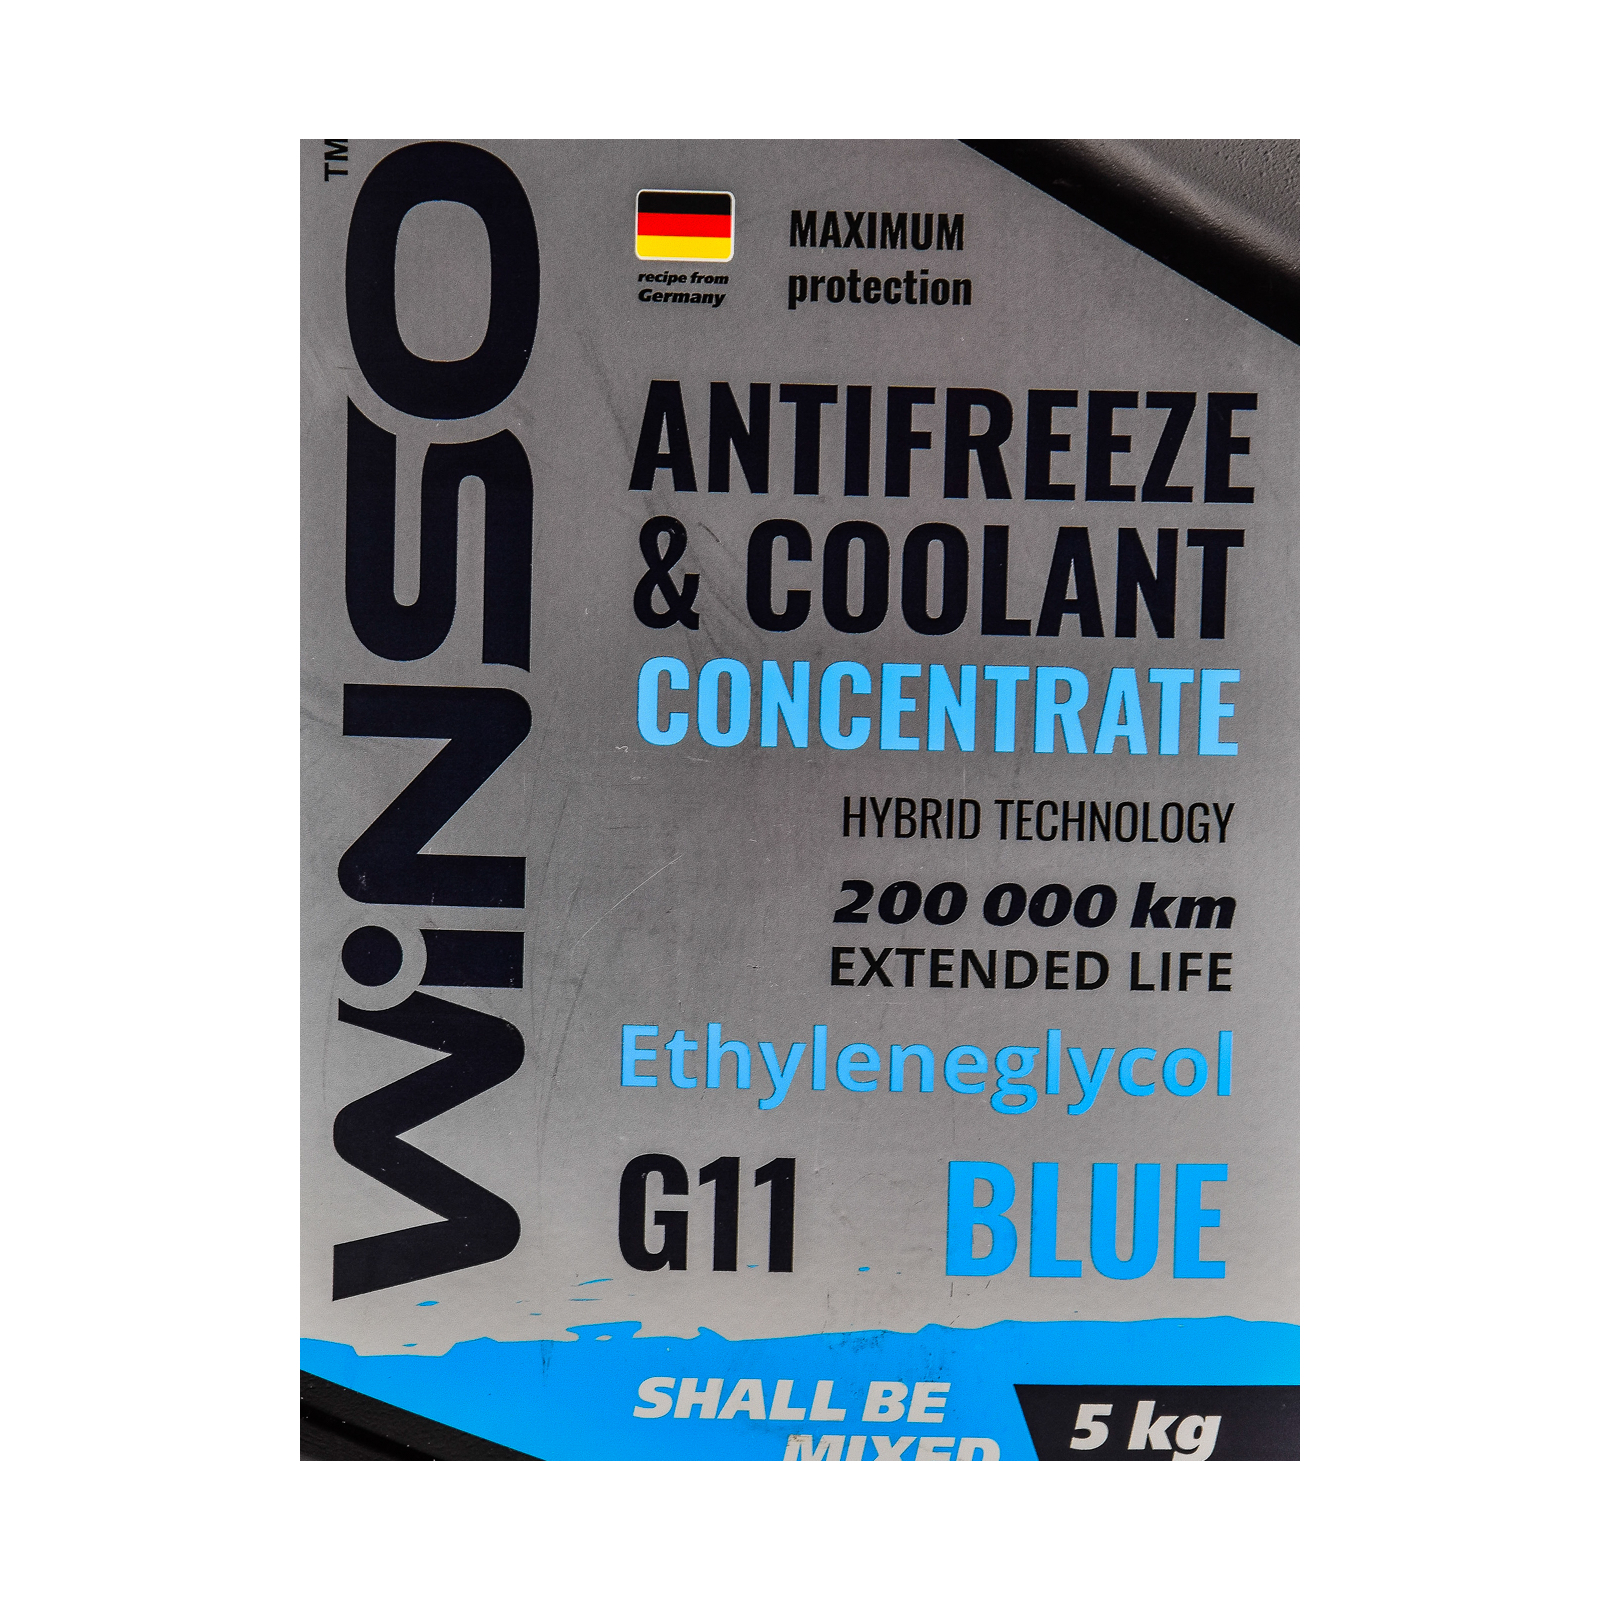 Антифриз WINSO COOLANT CONCENTRATE WINSO BLUE G11 концентрат 5kg (881030) изображение 2